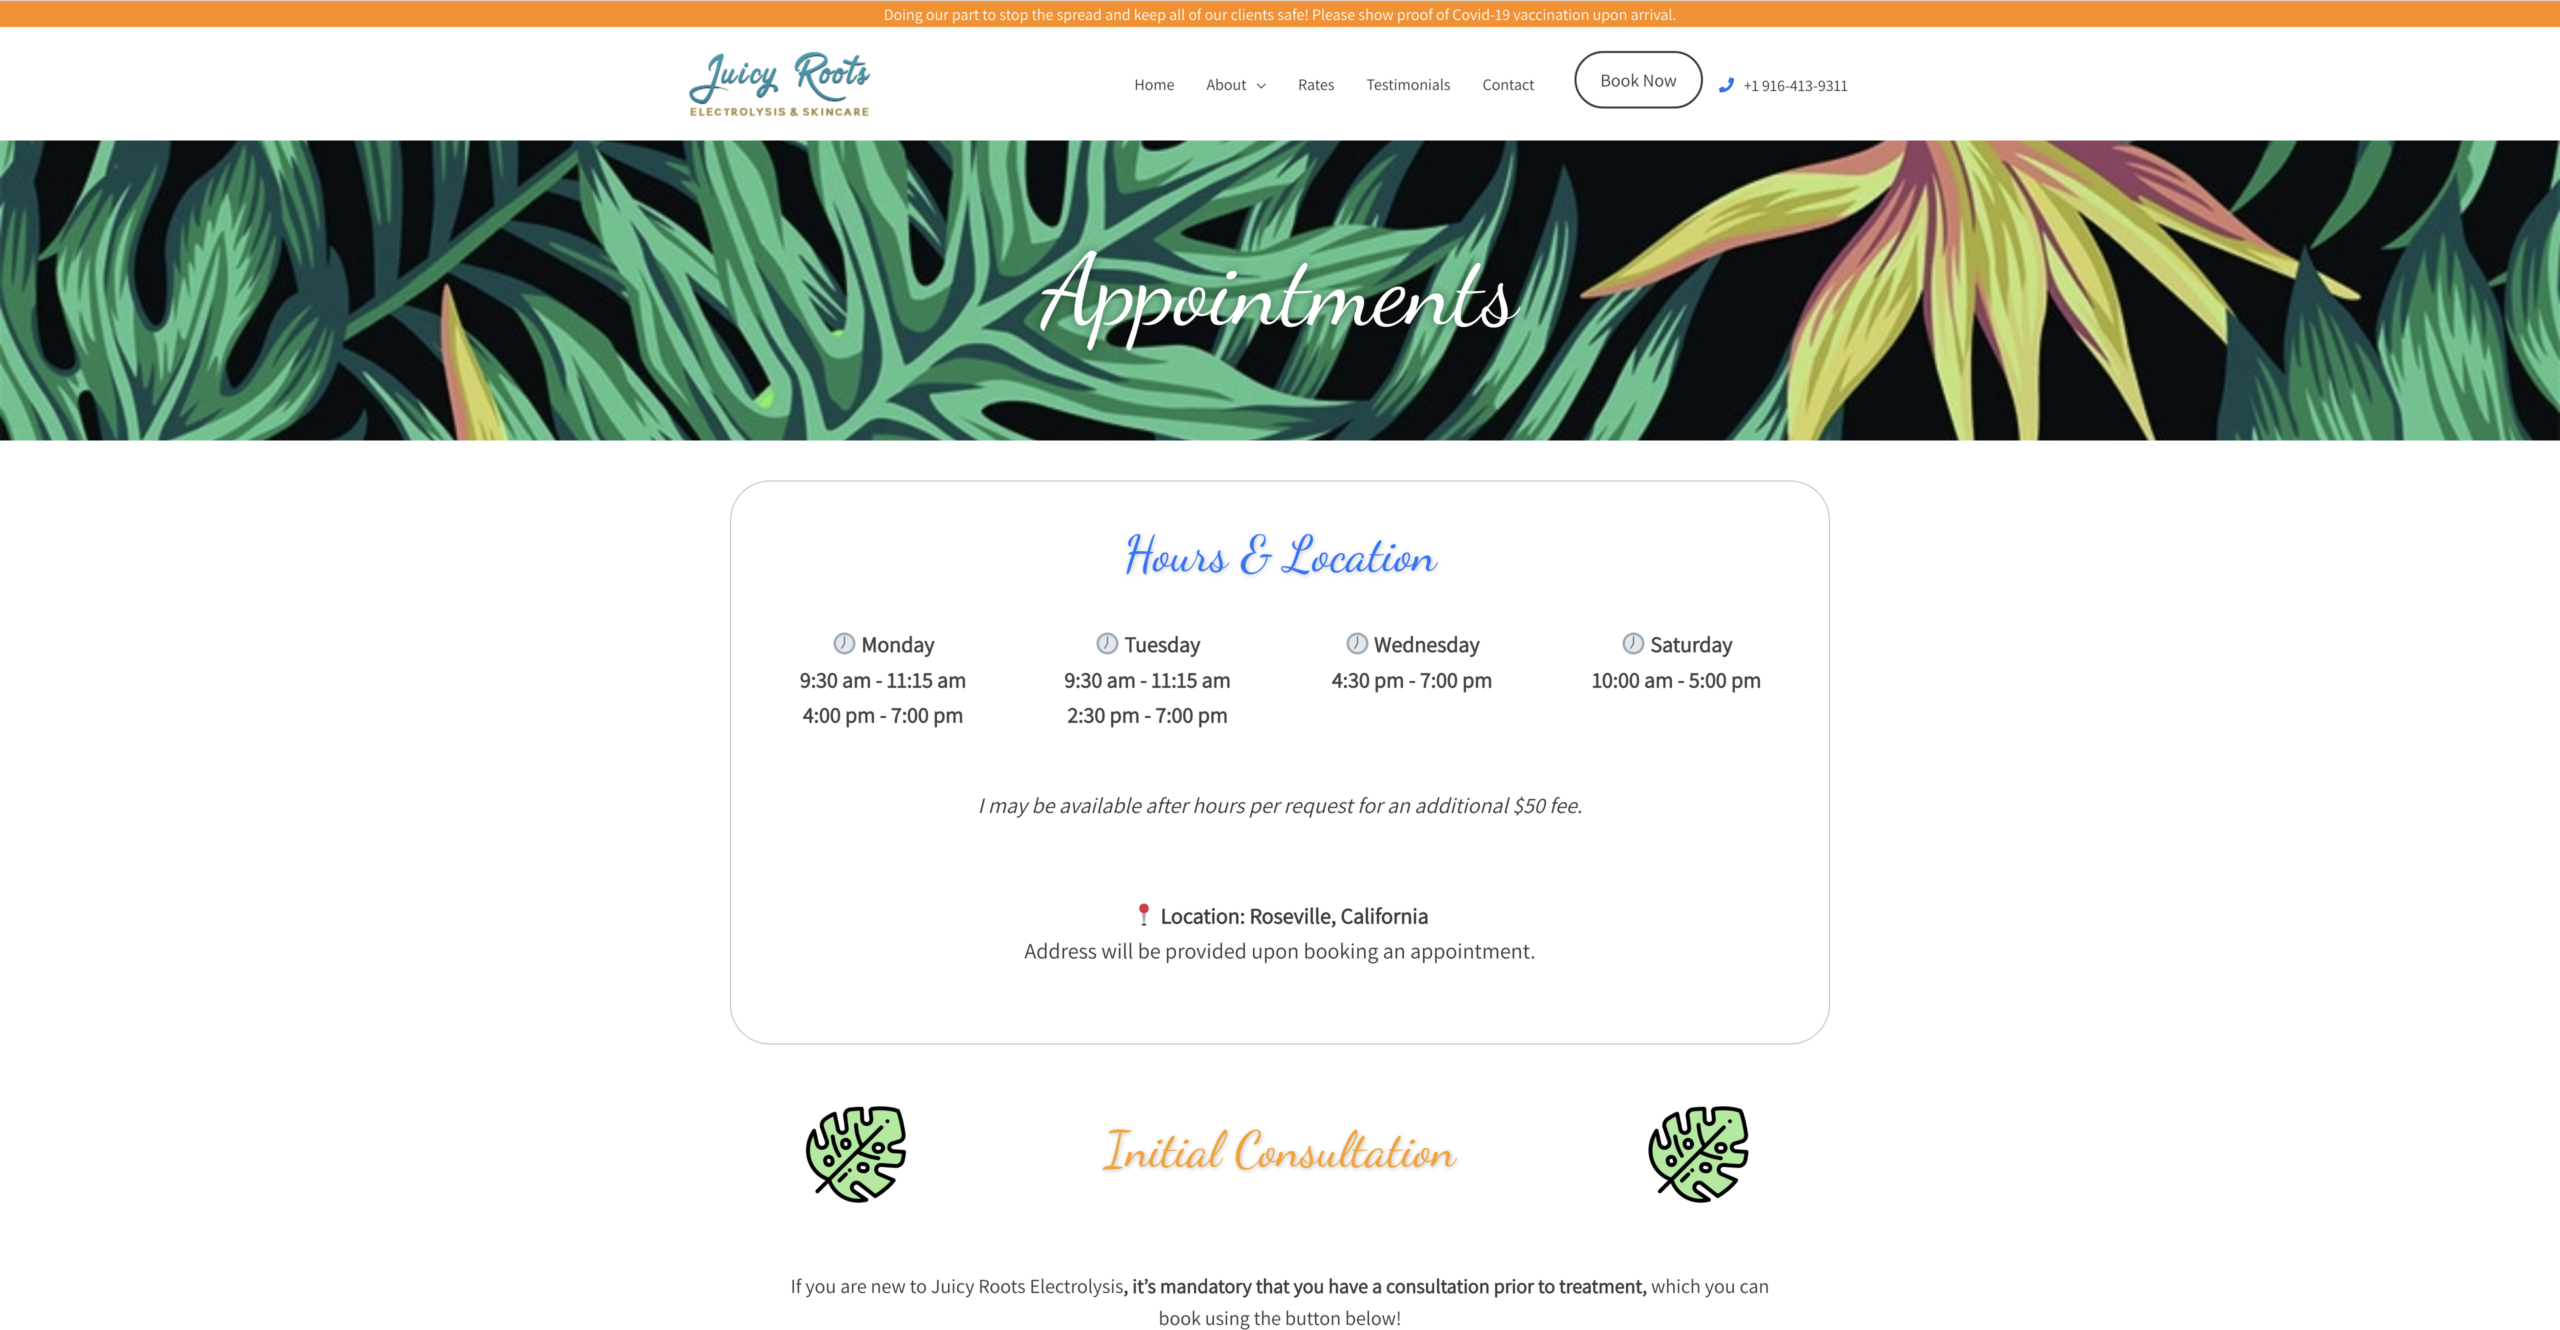 Juicy Roots Website Sample 6